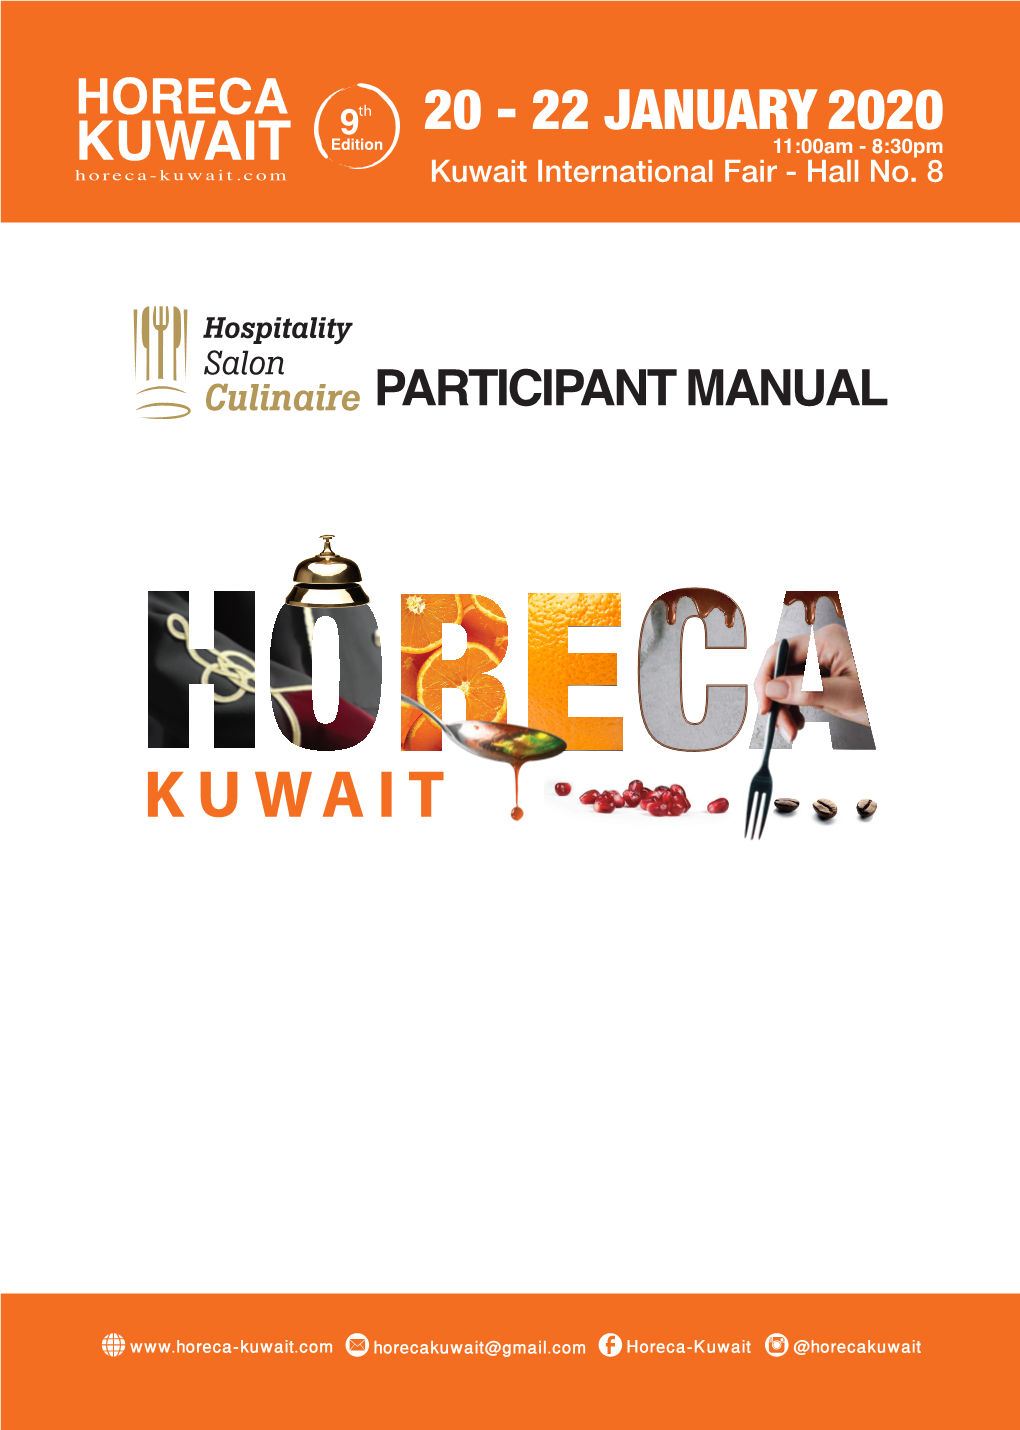 Kuwait.Comkuwait Kuwait International Fair - Hall No